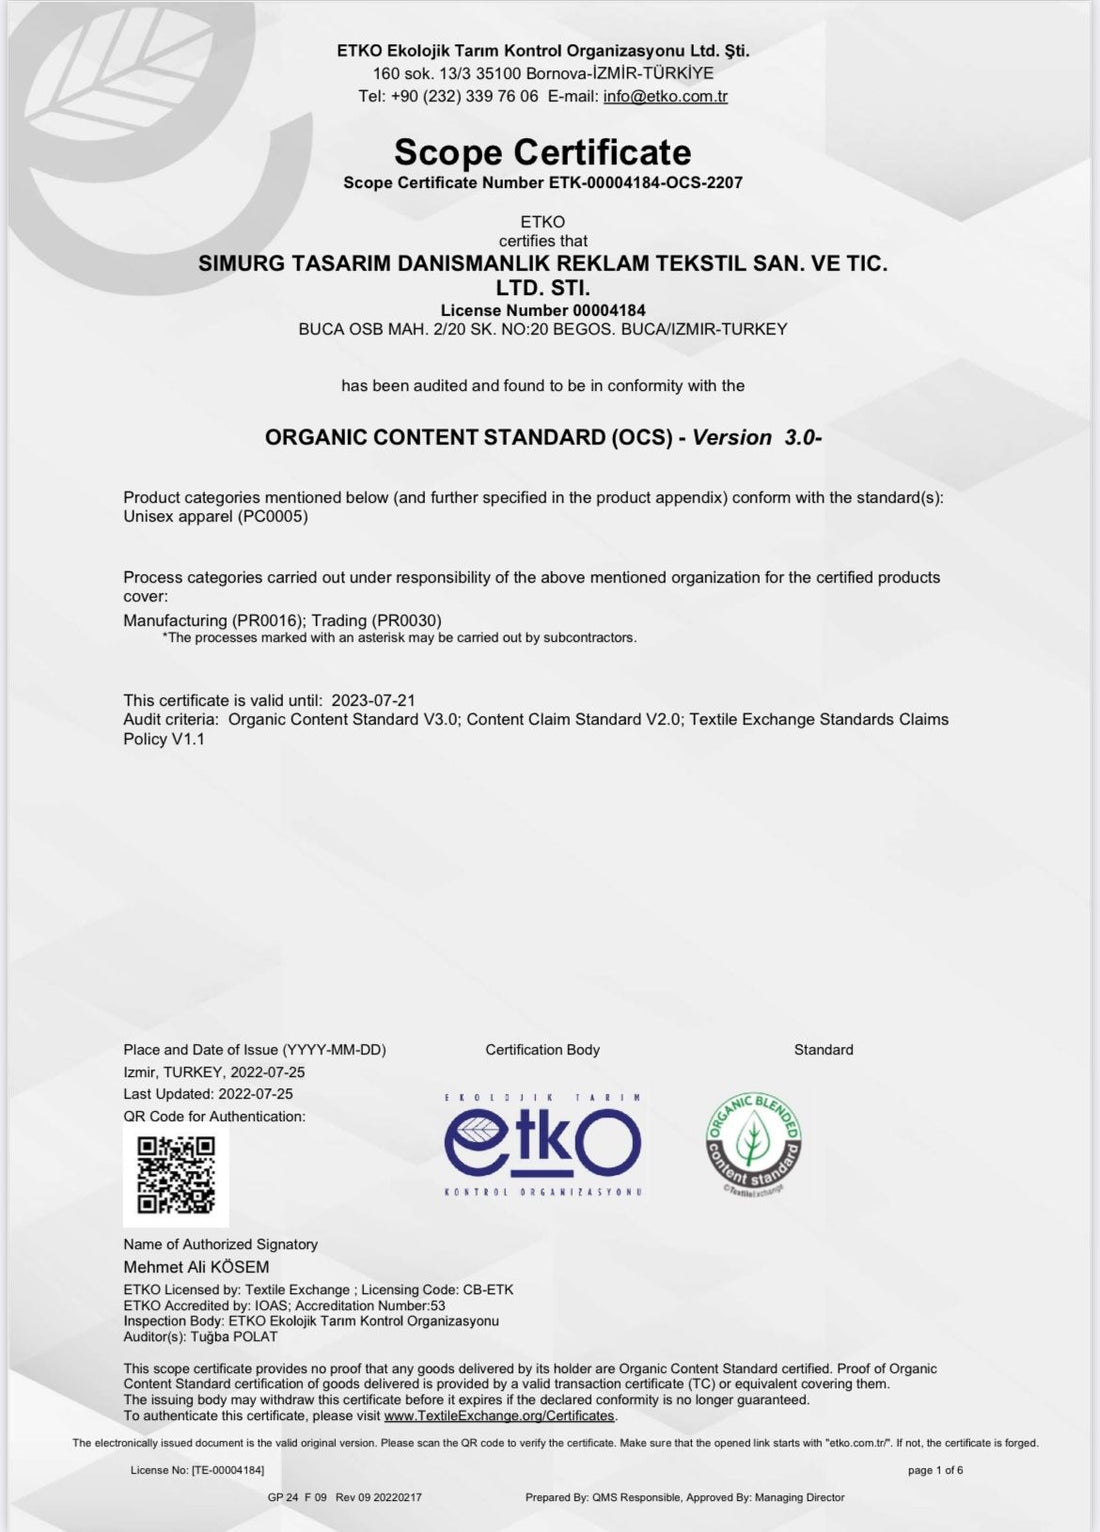 Organic Content Standard (OCS) - Version 3.0 -